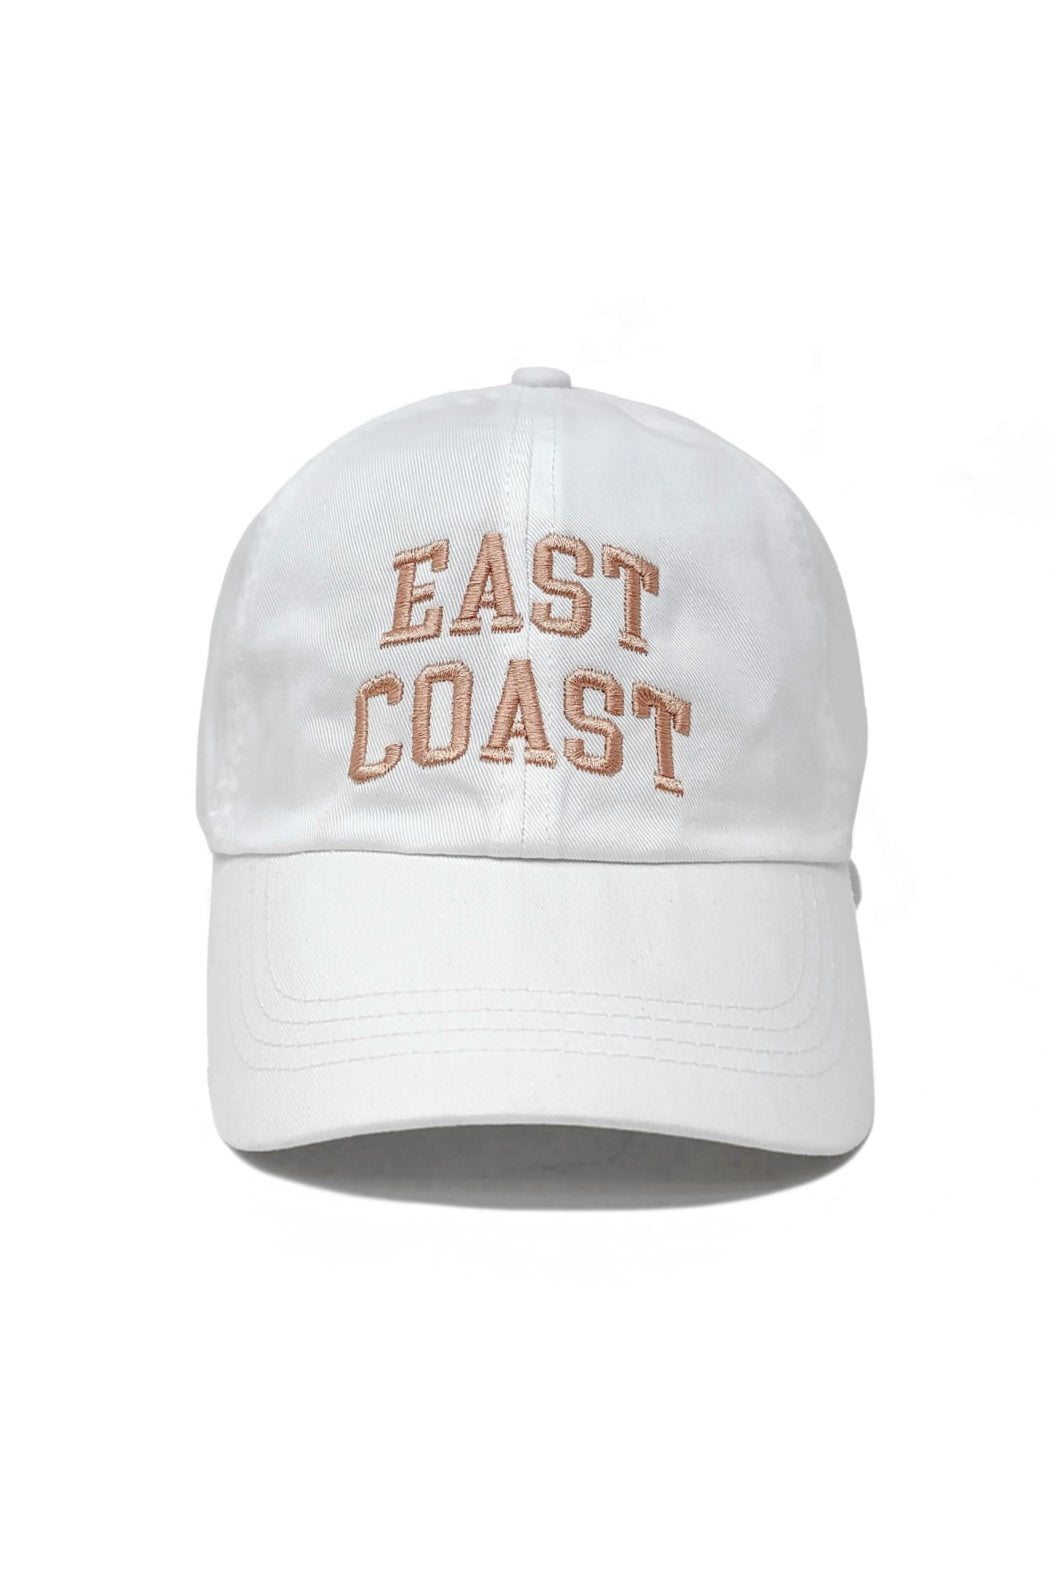 East Coast / West Coast Cap